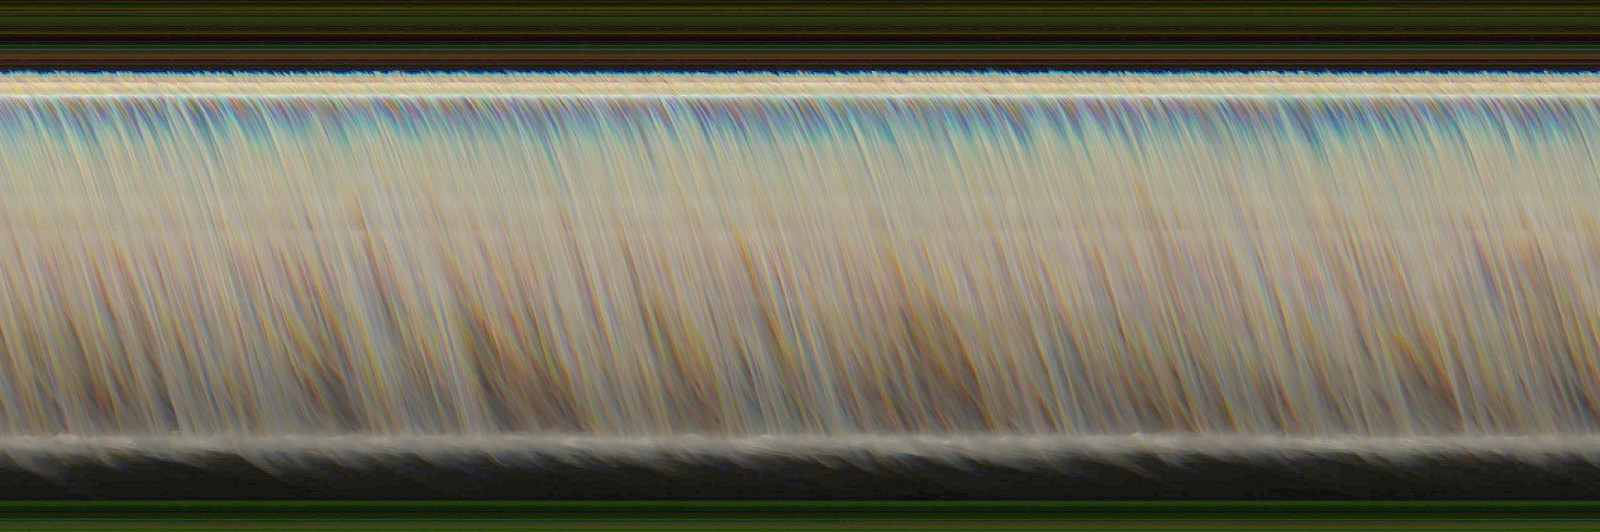 Jay Mark Johnson, AKAKA KASKATA 17, 2010 Akaka Falls HI
archival pigment on paper, mounted on aluminum, 40 x 120 in. (101.6 x 304.8 cm)